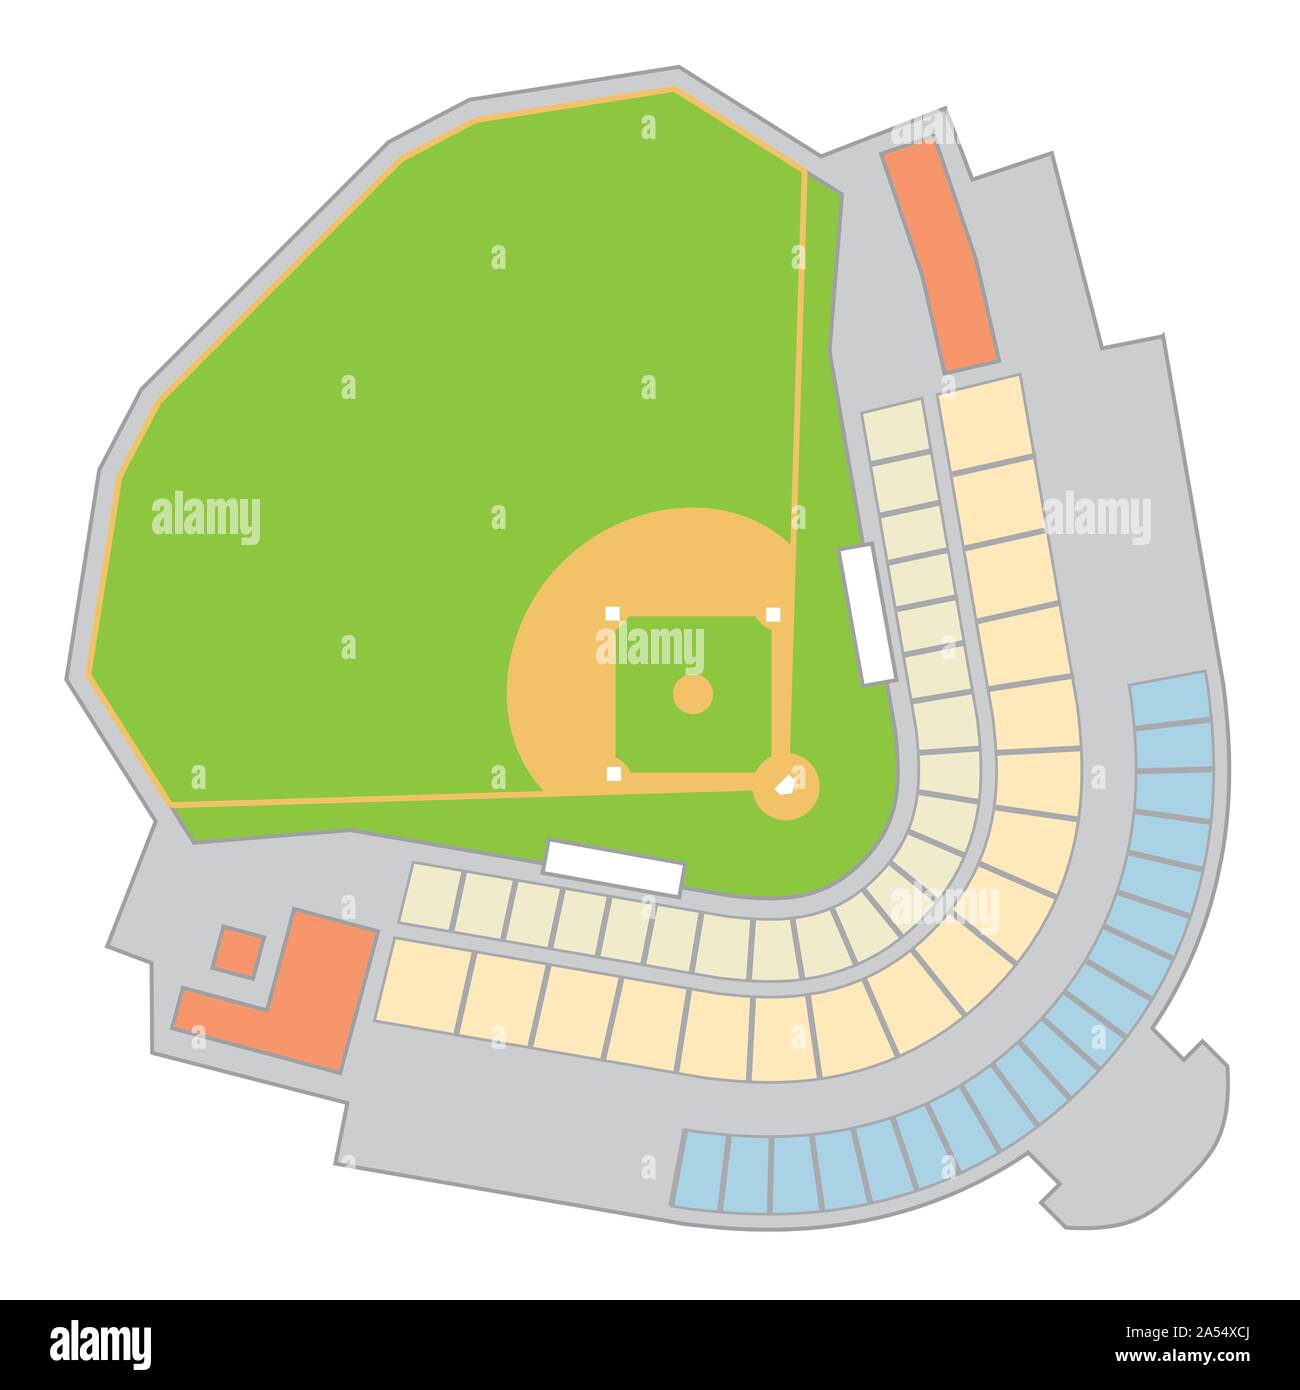 colored floor plan of a fictitious baseball stadium Stock Vector